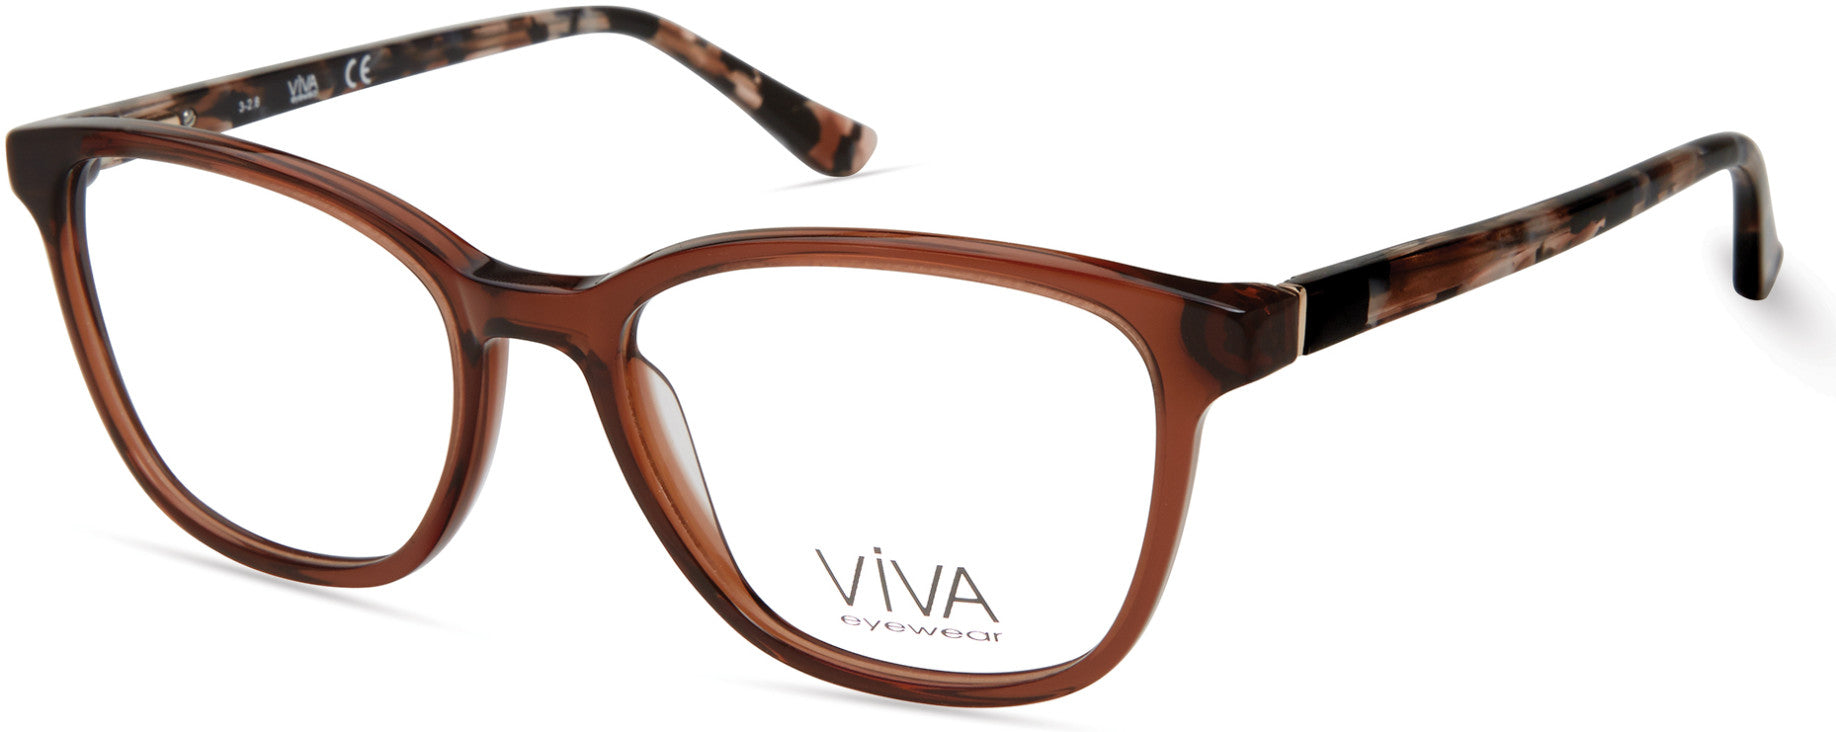 Viva VV4517 Geometric Eyeglasses 045-045 - Shiny Light Brown